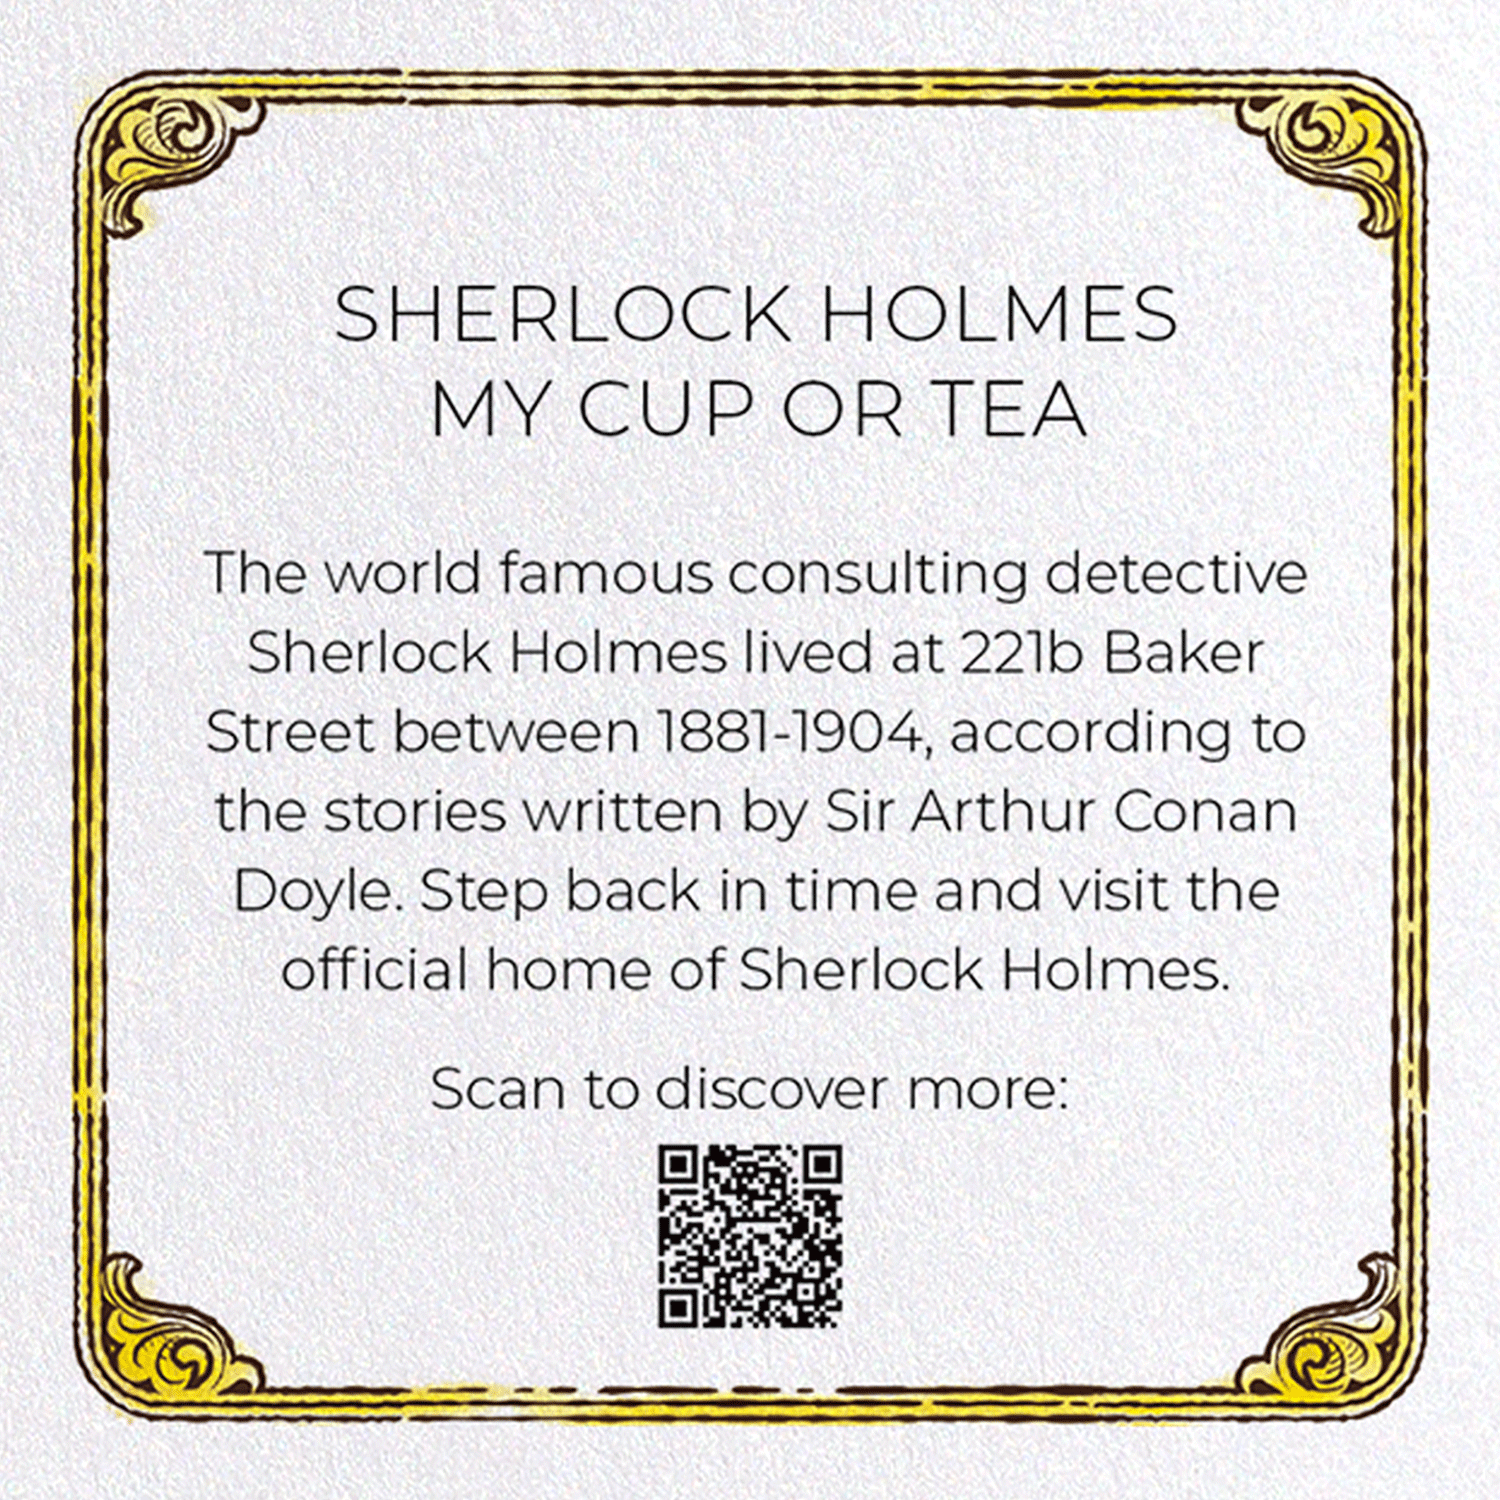 SHERLOCK HOLMES MY CUP OR TEA: Bespoke Greeting Card